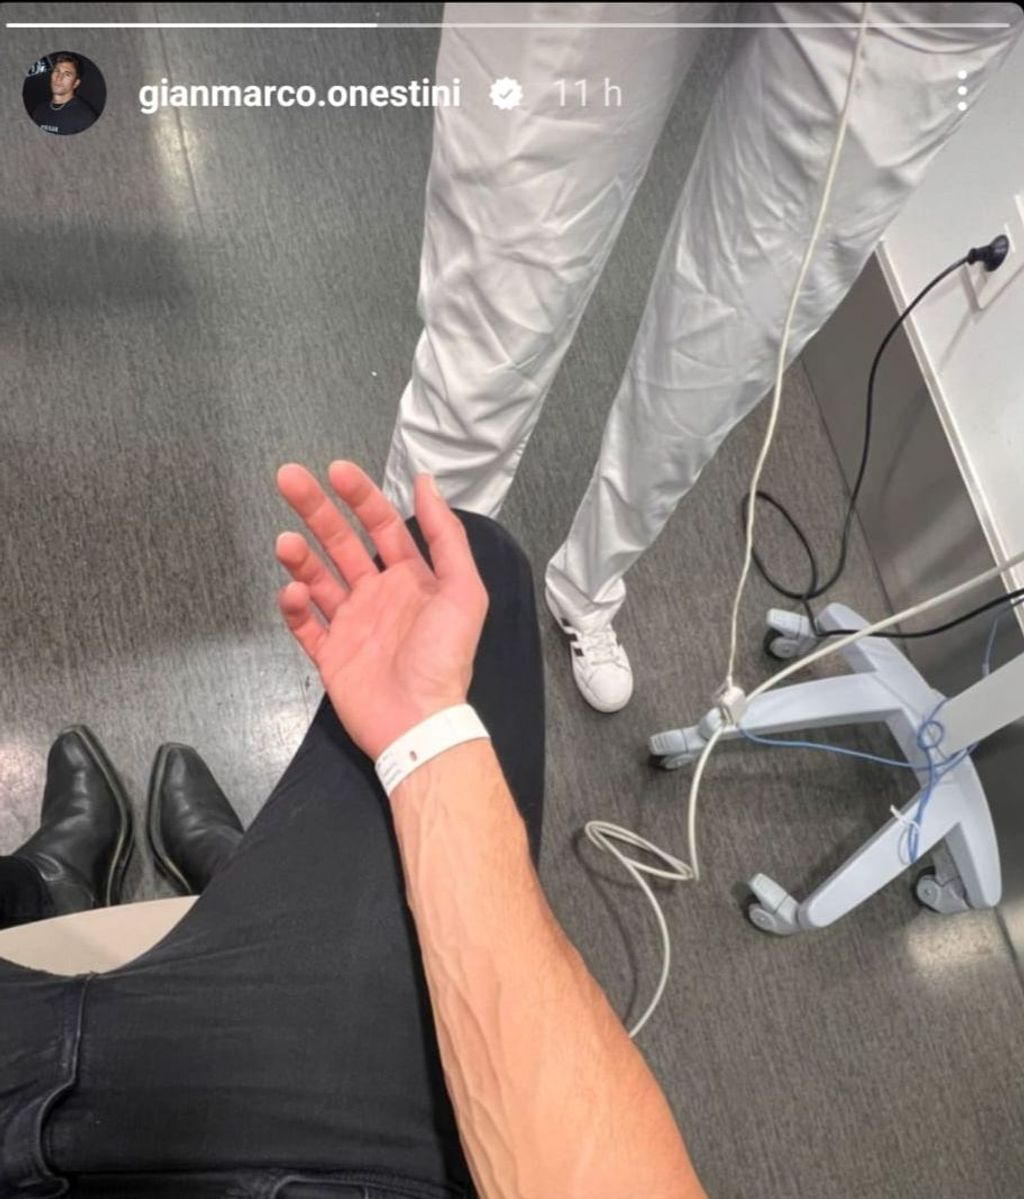 Gianmarco Onestini en el hospital